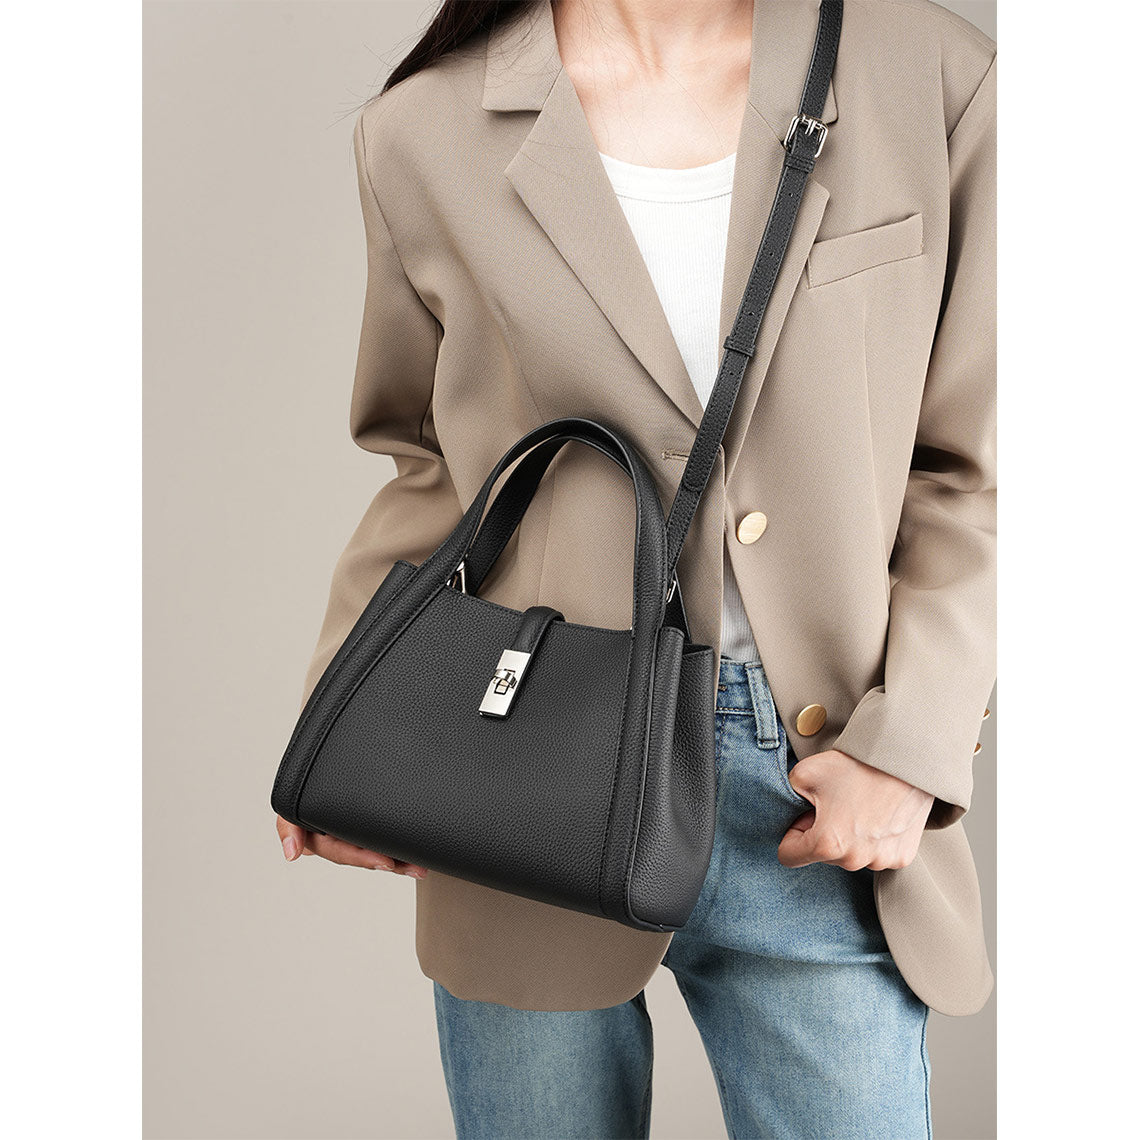 Black Leather Handbag Crossbody Bag for Women - POPSEWING®